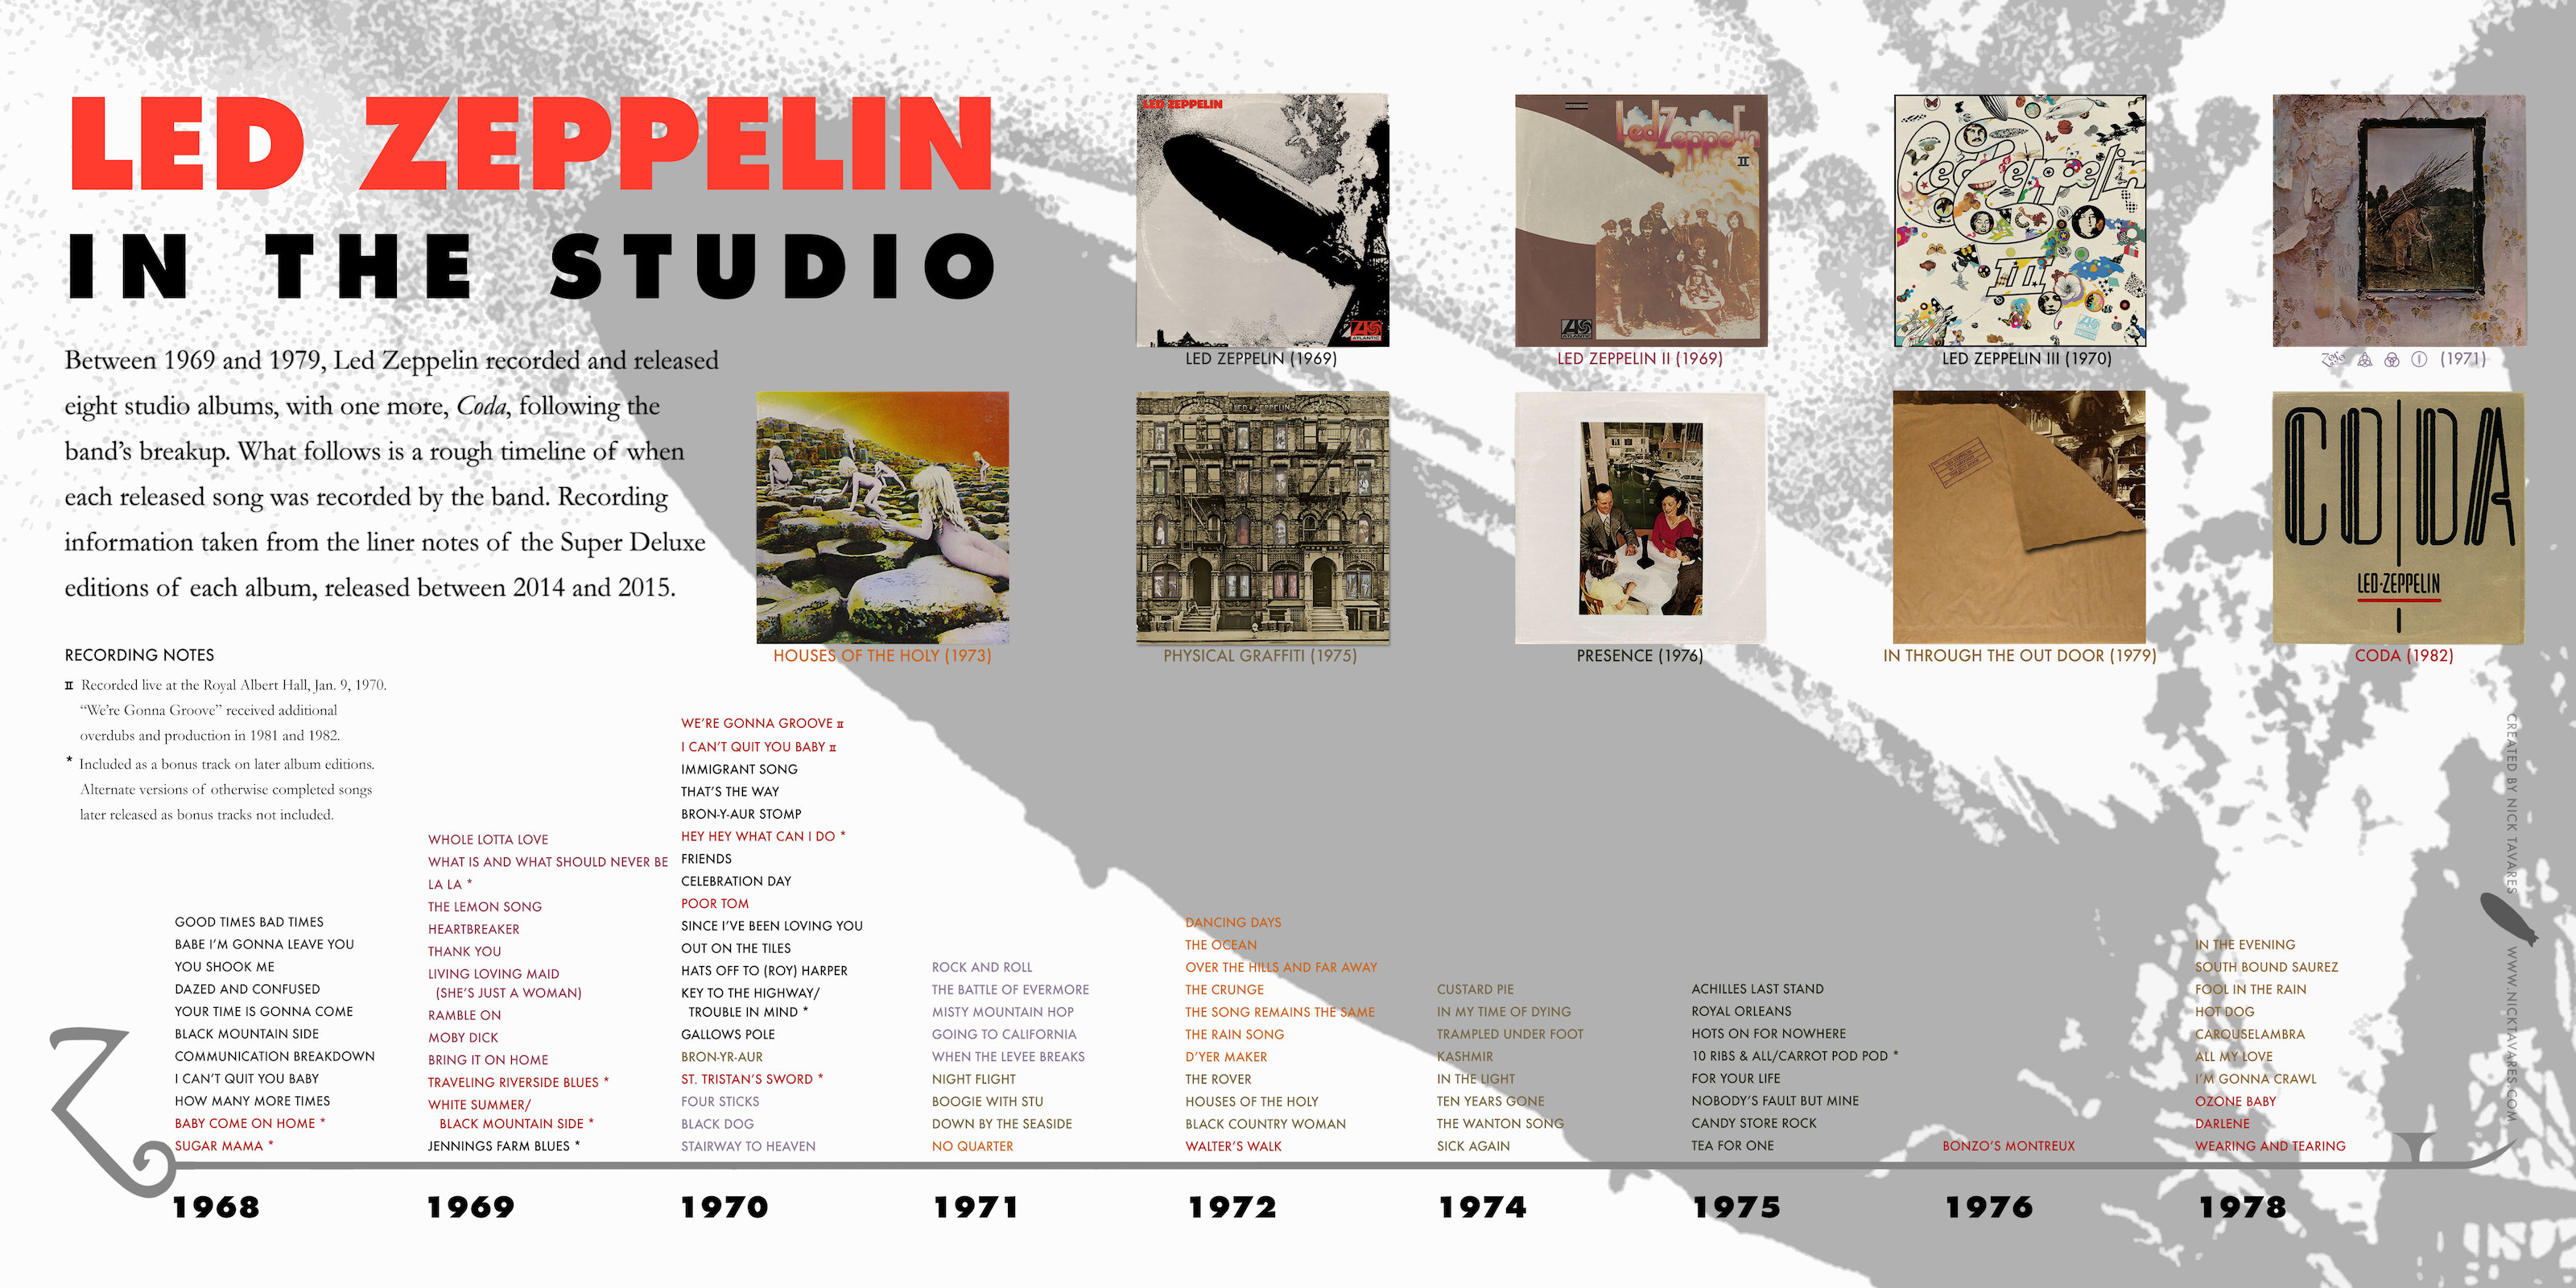 Led Zeppelin in the studio